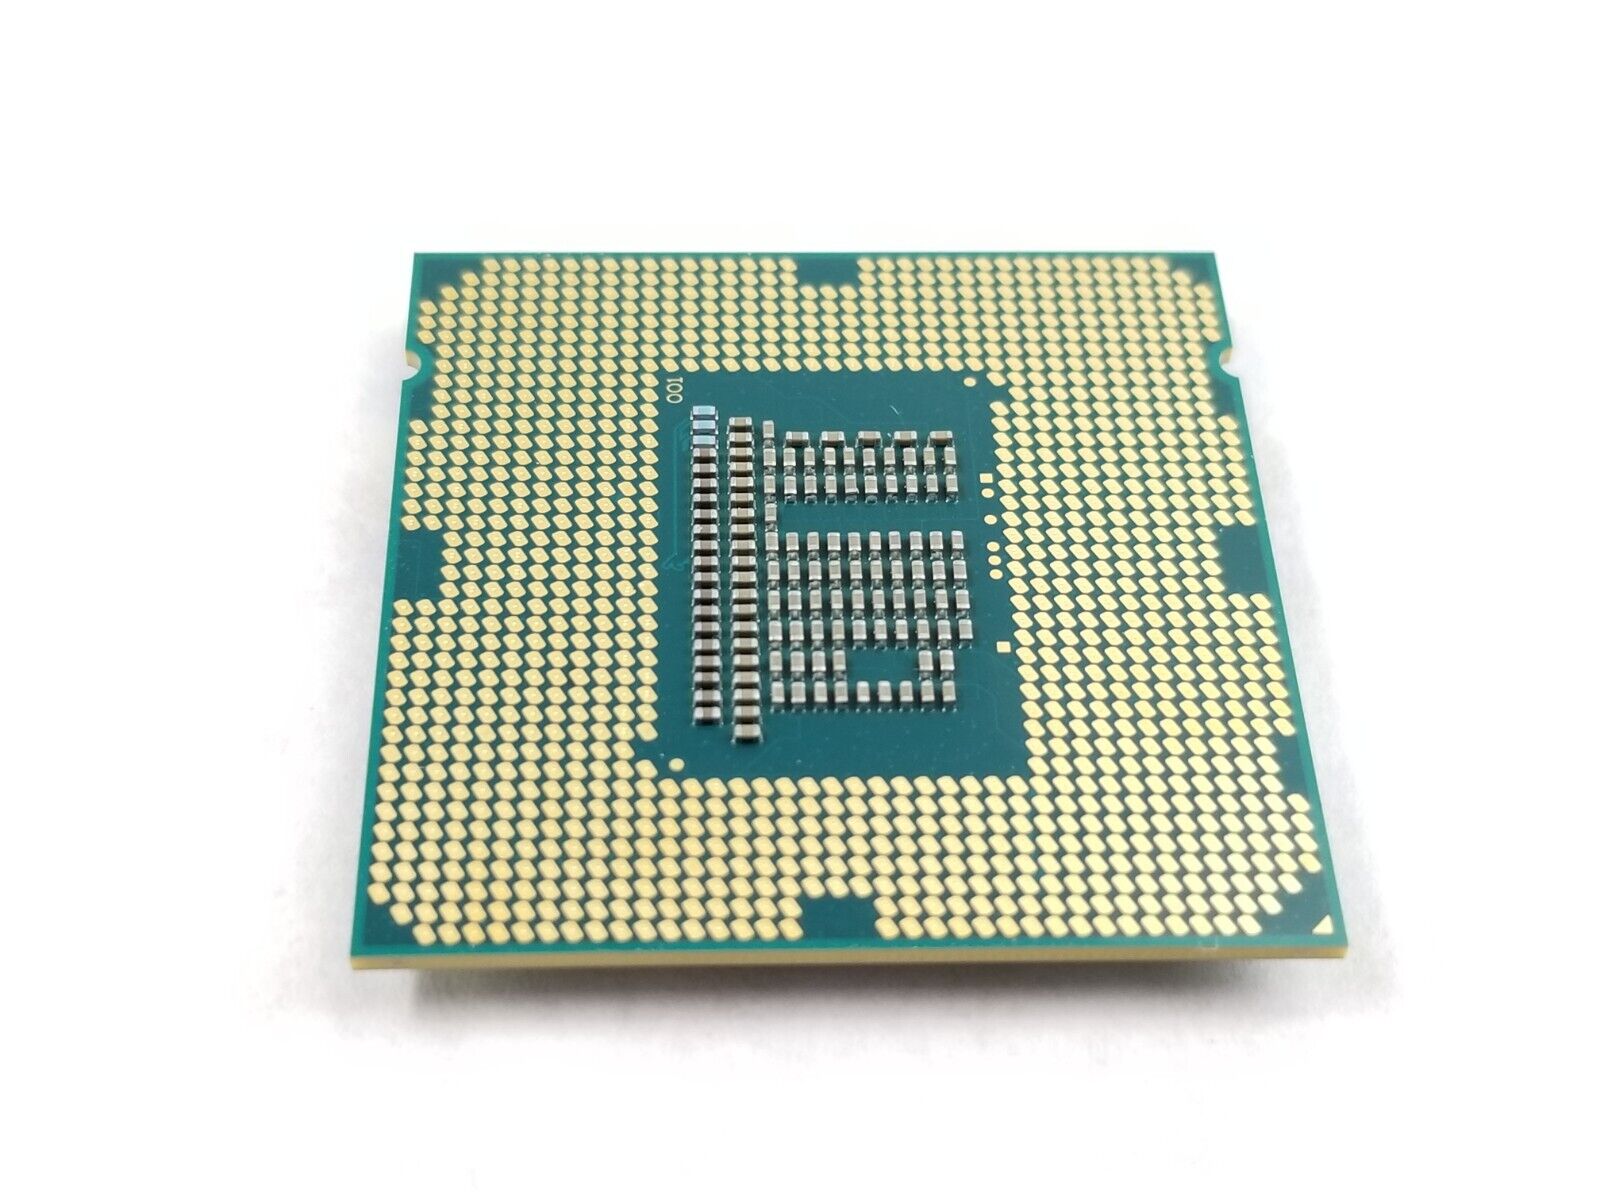 Intel Core i5-3470T SR0RJ Low-Power 2.9GHz Dual-Core Processor